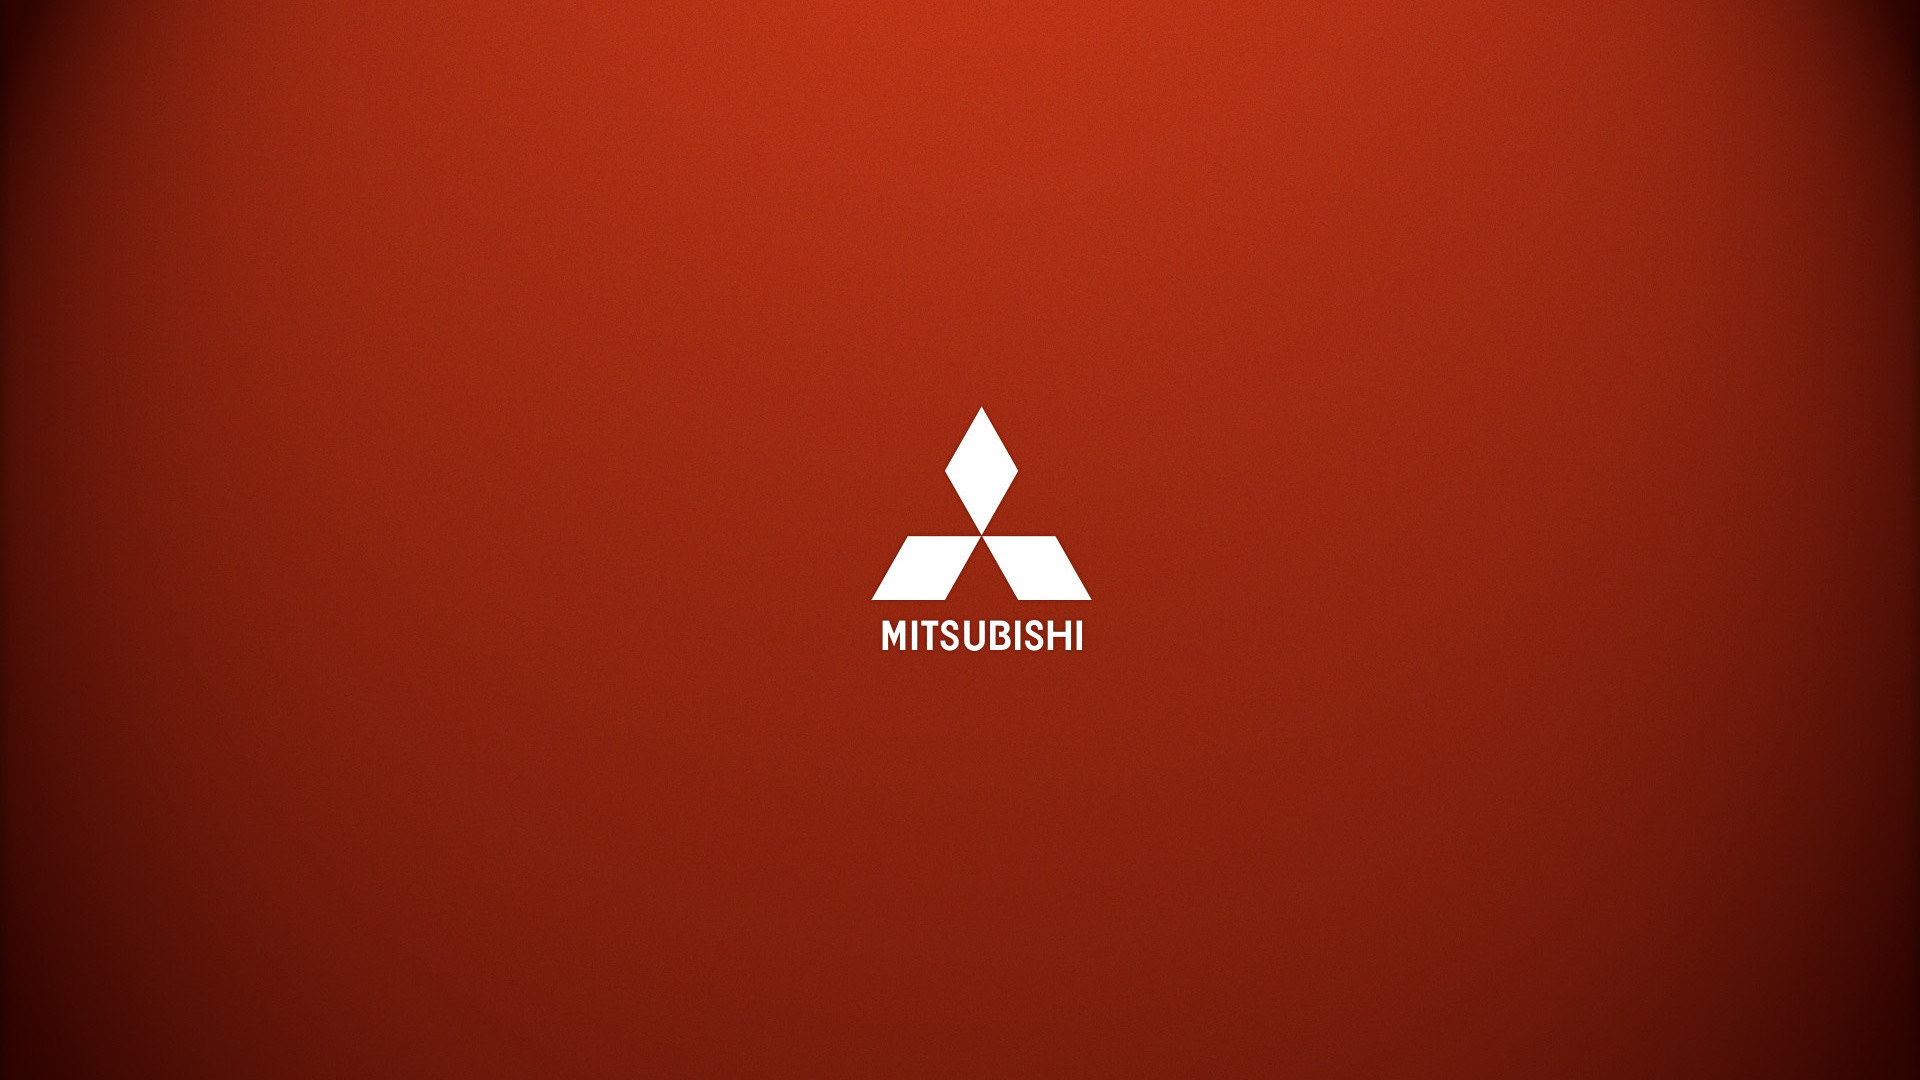 mitsubishi wallpaper hd,orange,schriftart,text,grafik,grafikdesign